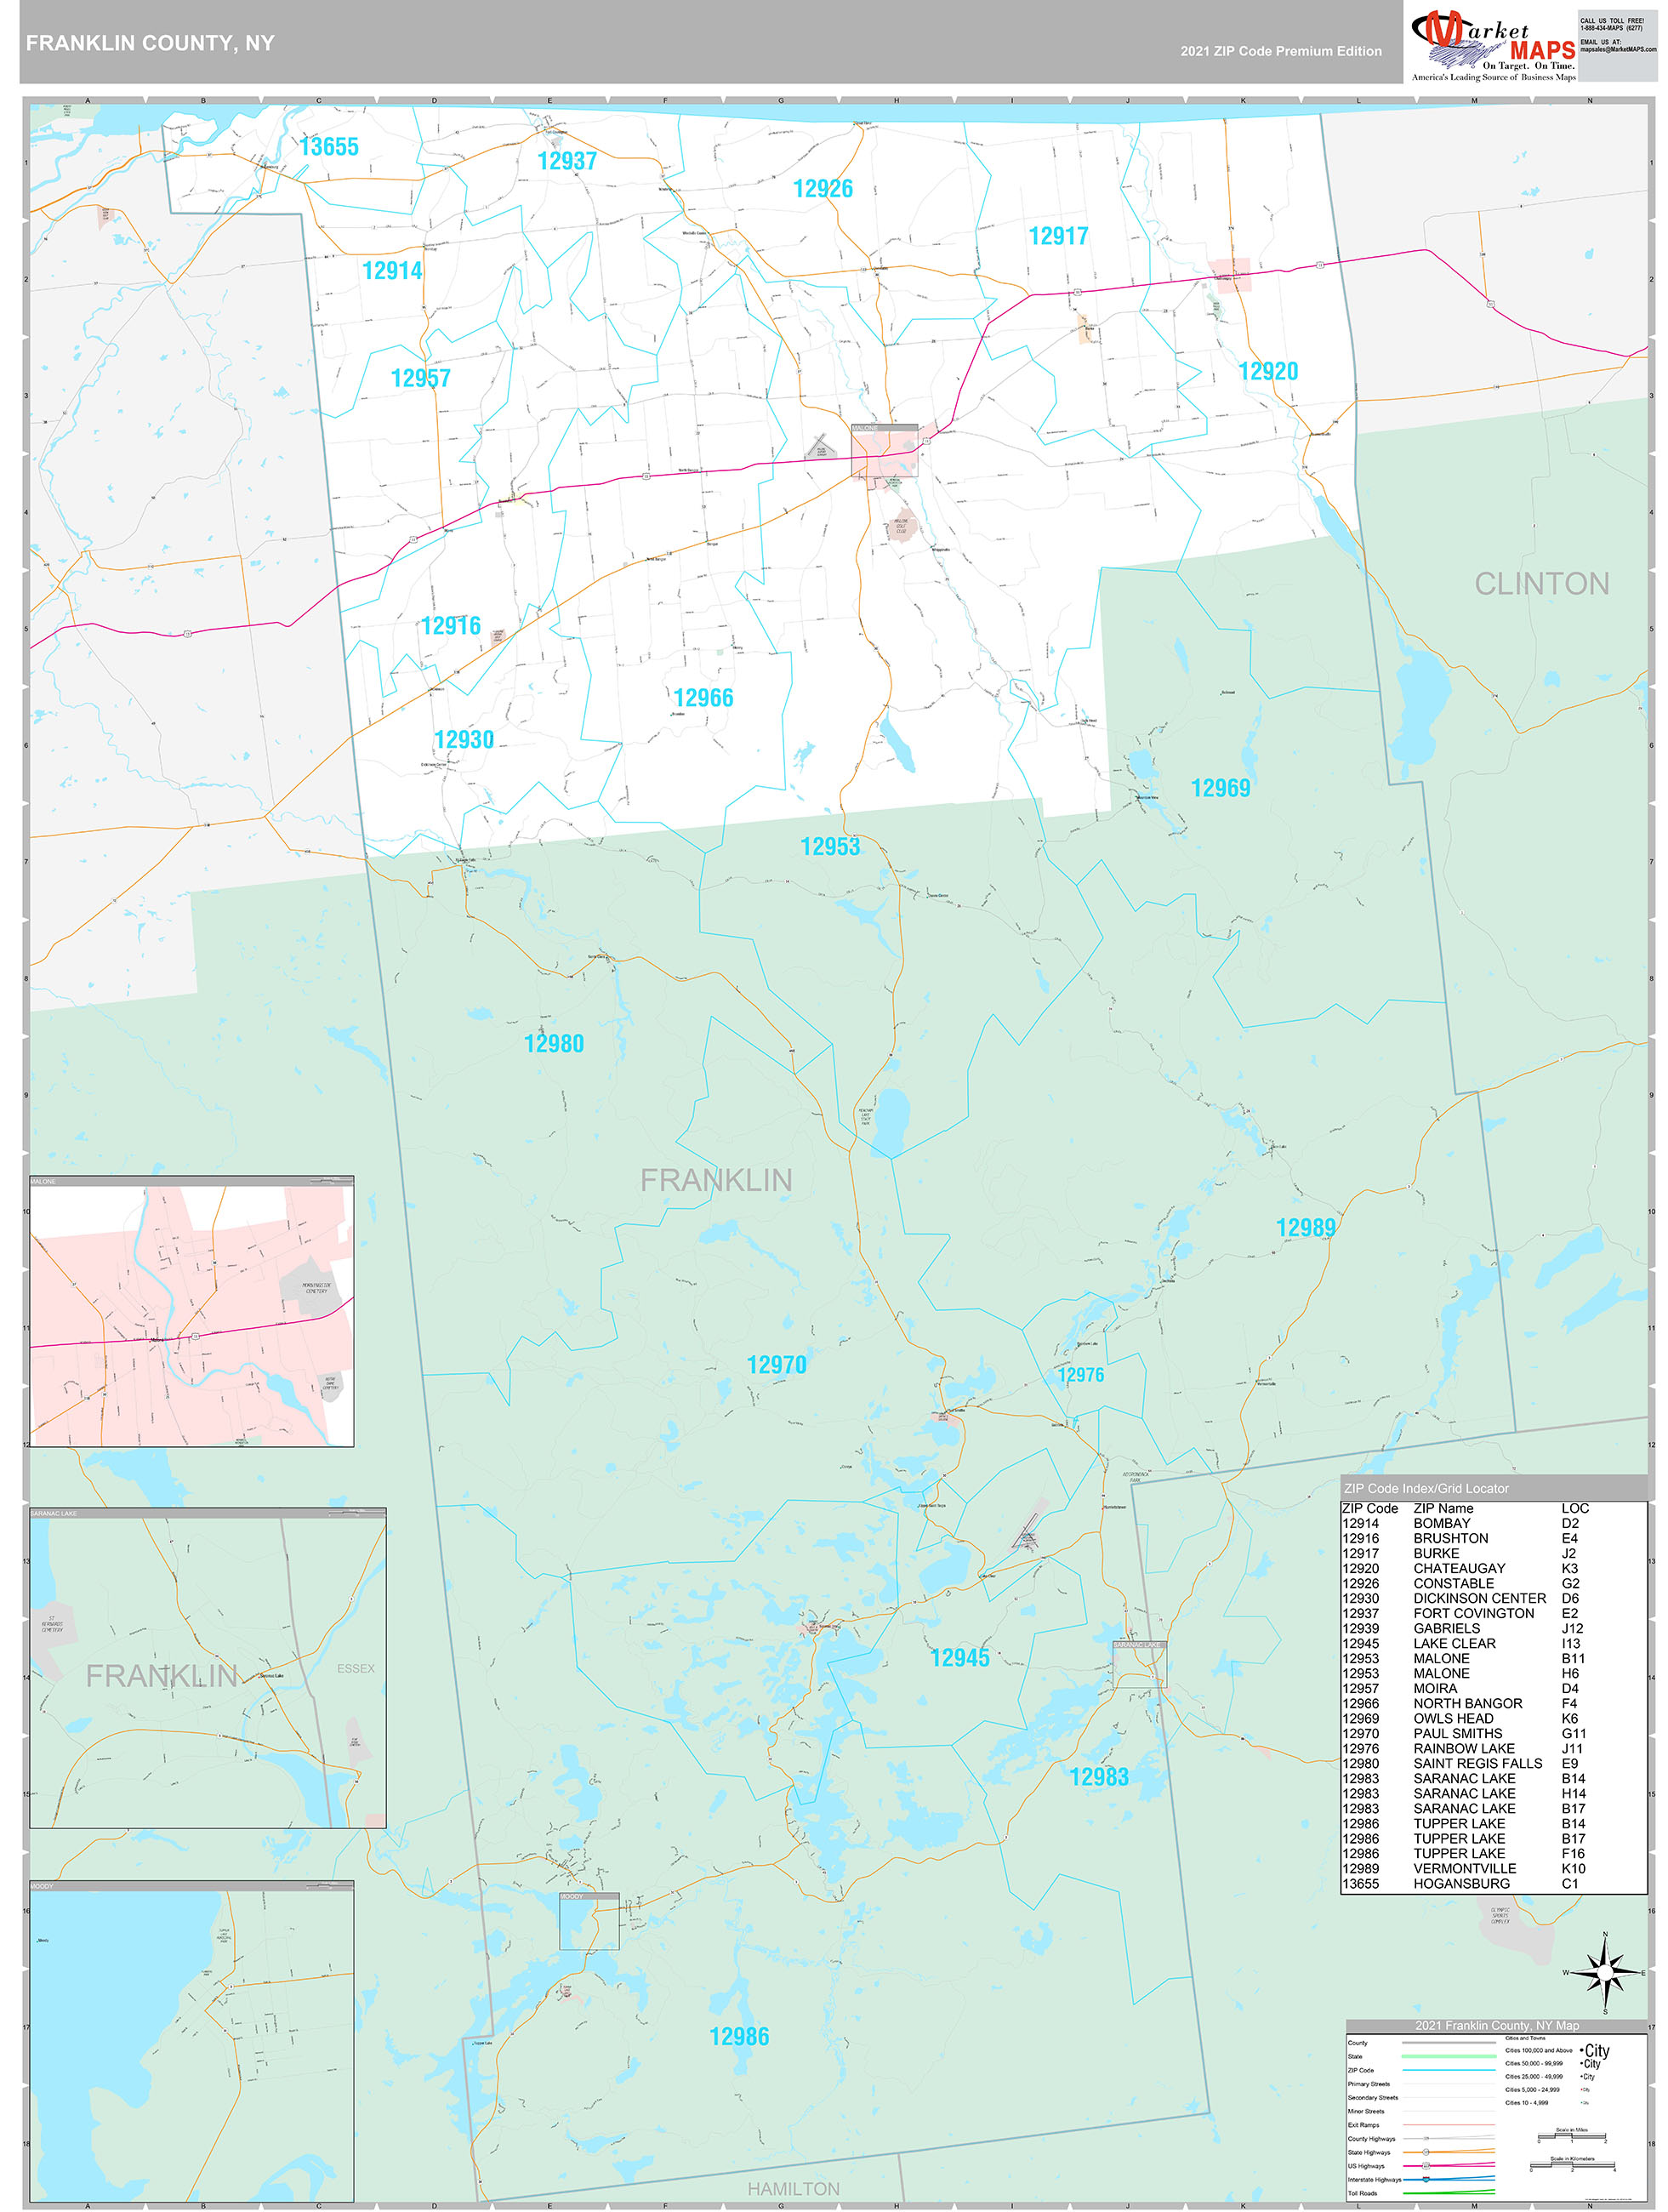 Franklin County, NY Wall Map Premium Style by MarketMAPS